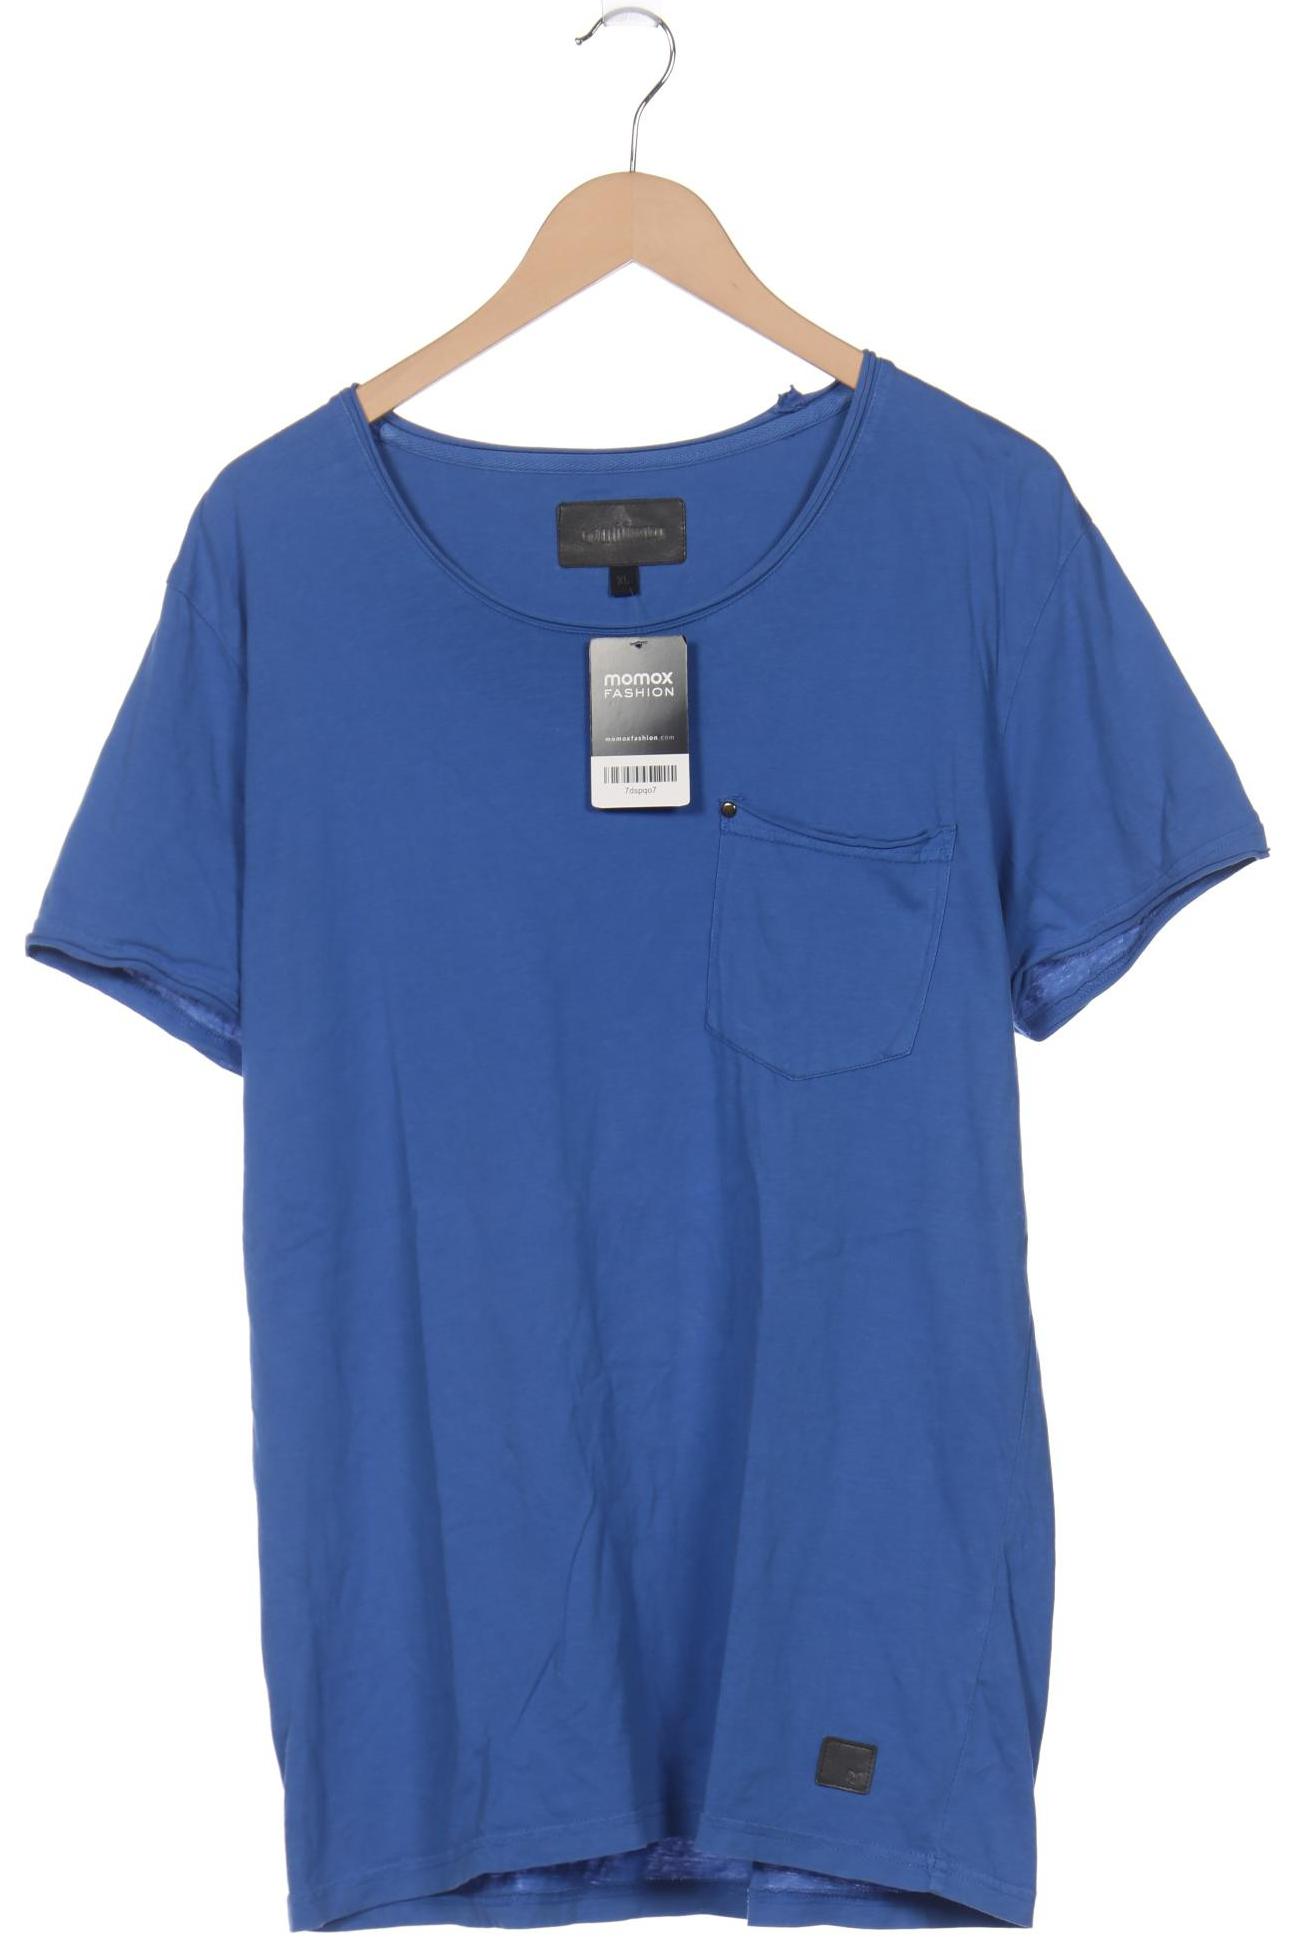 Minimum Herren T-Shirt, blau von Minimum